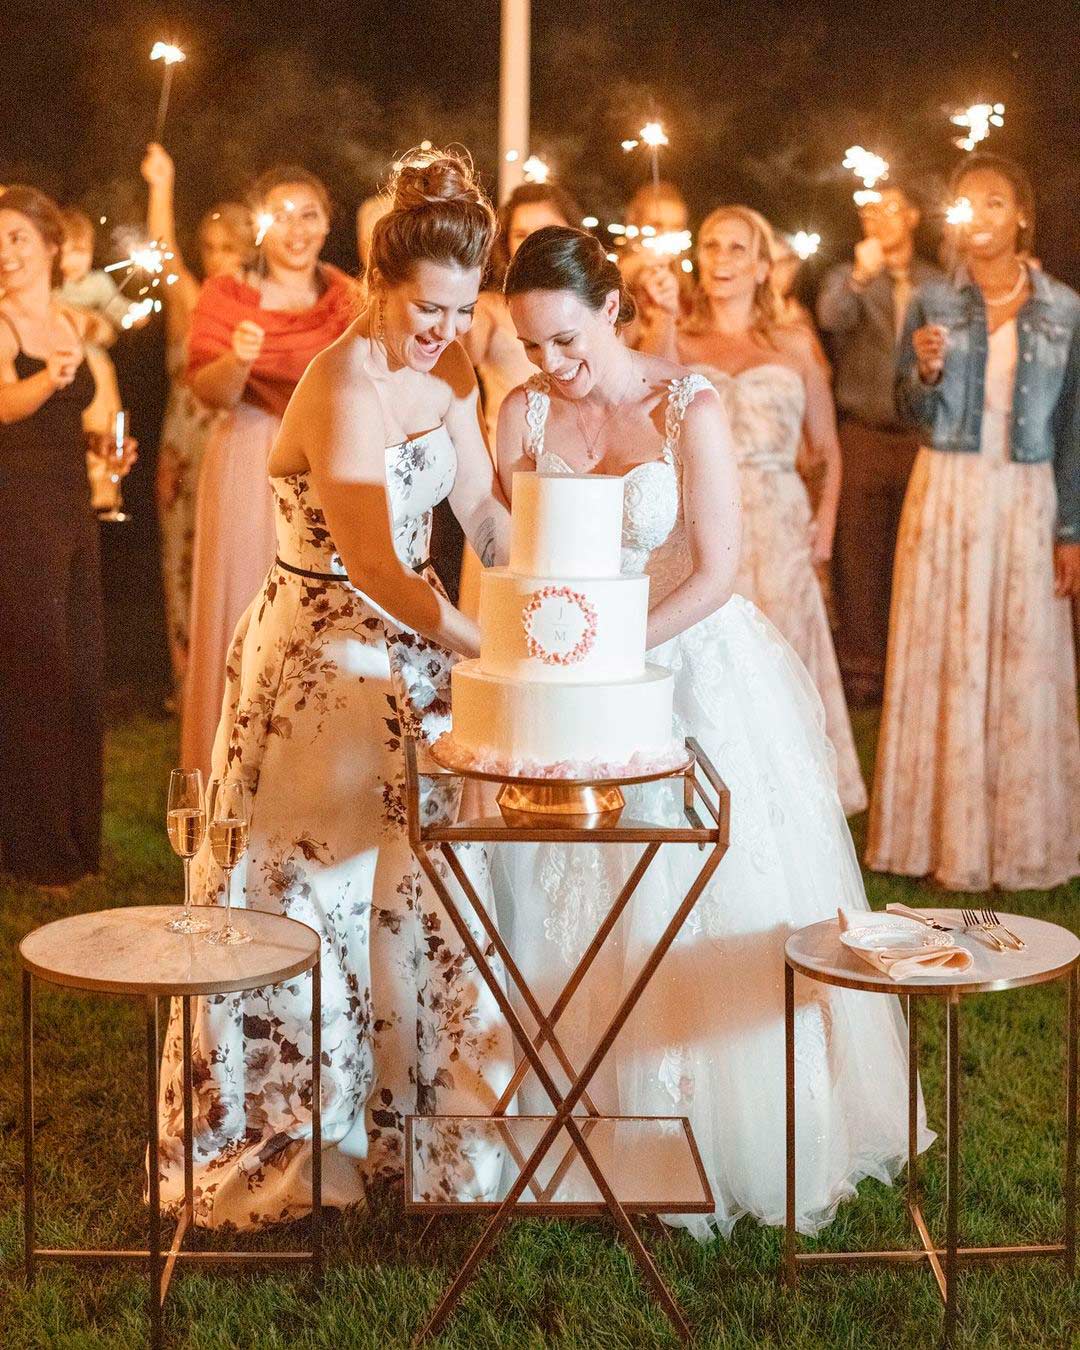 cake cutting wedding songs